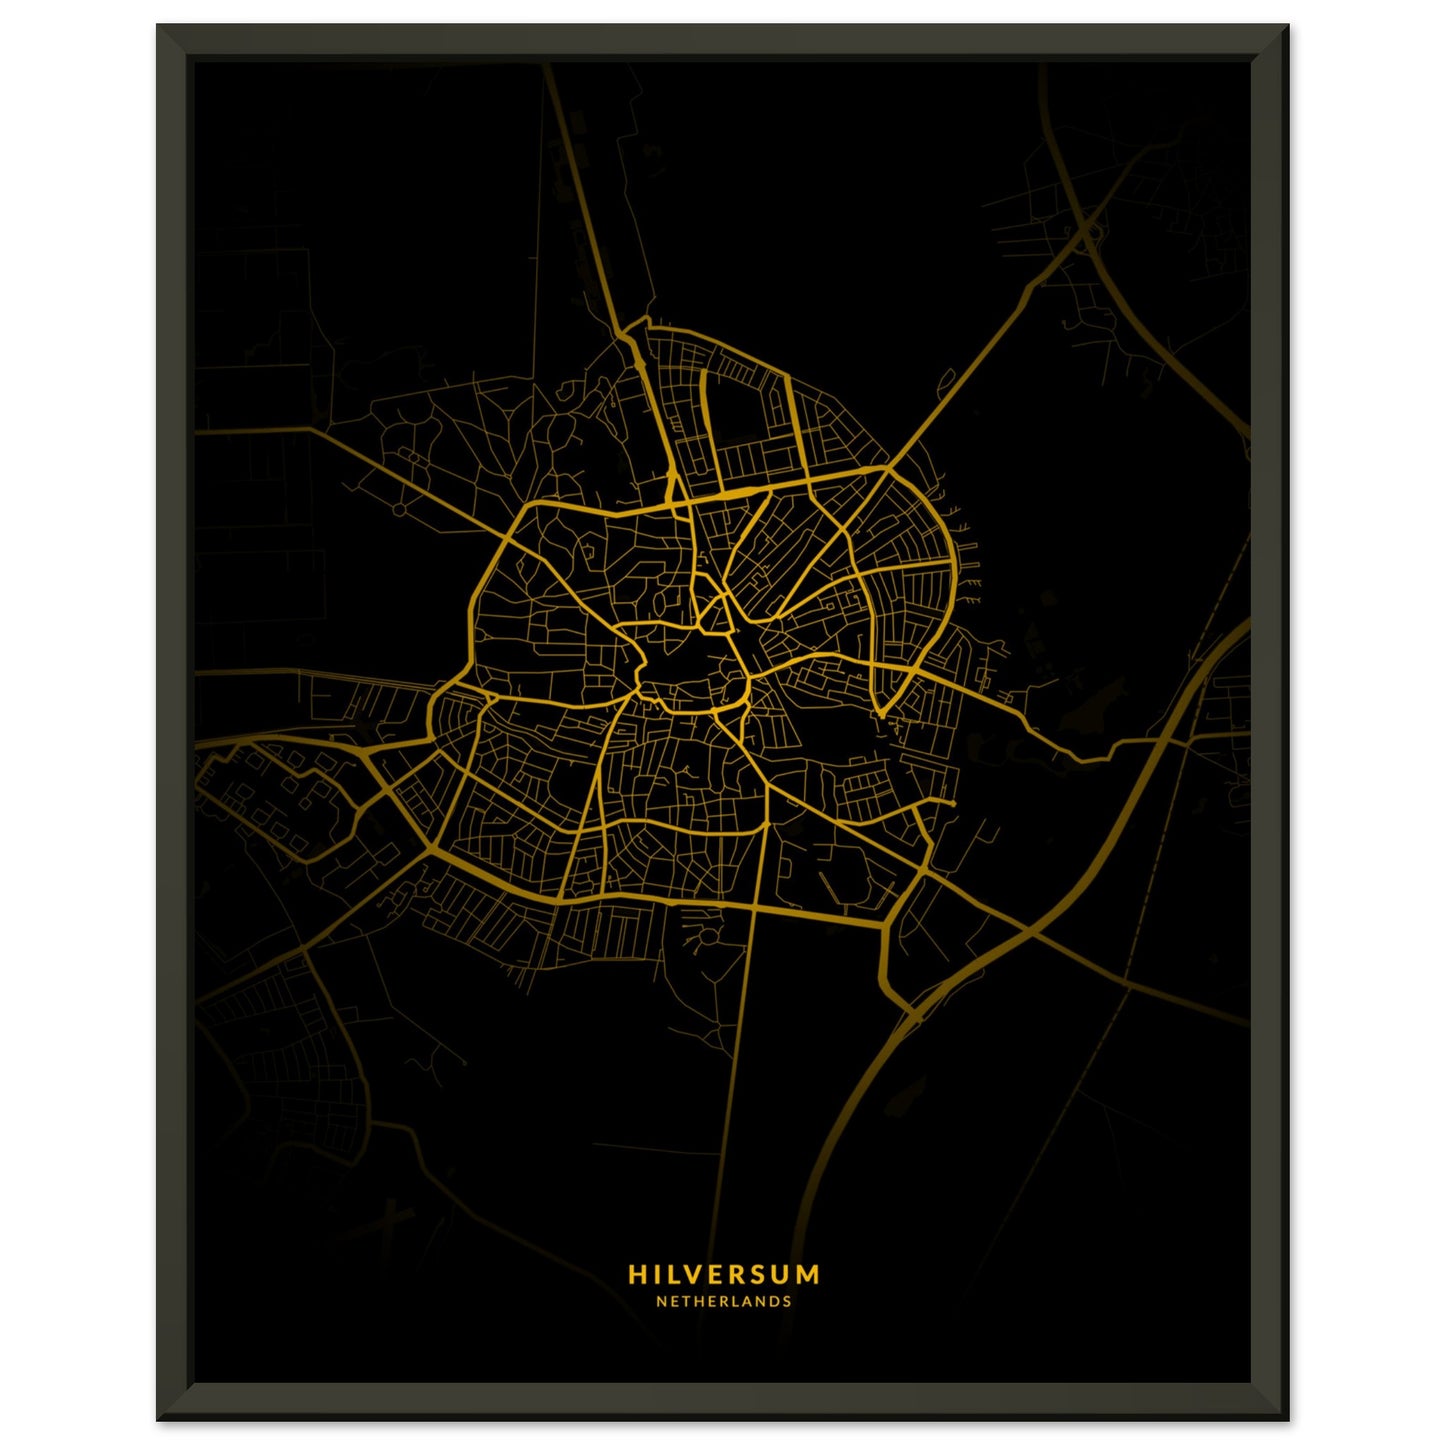 Hilversum map